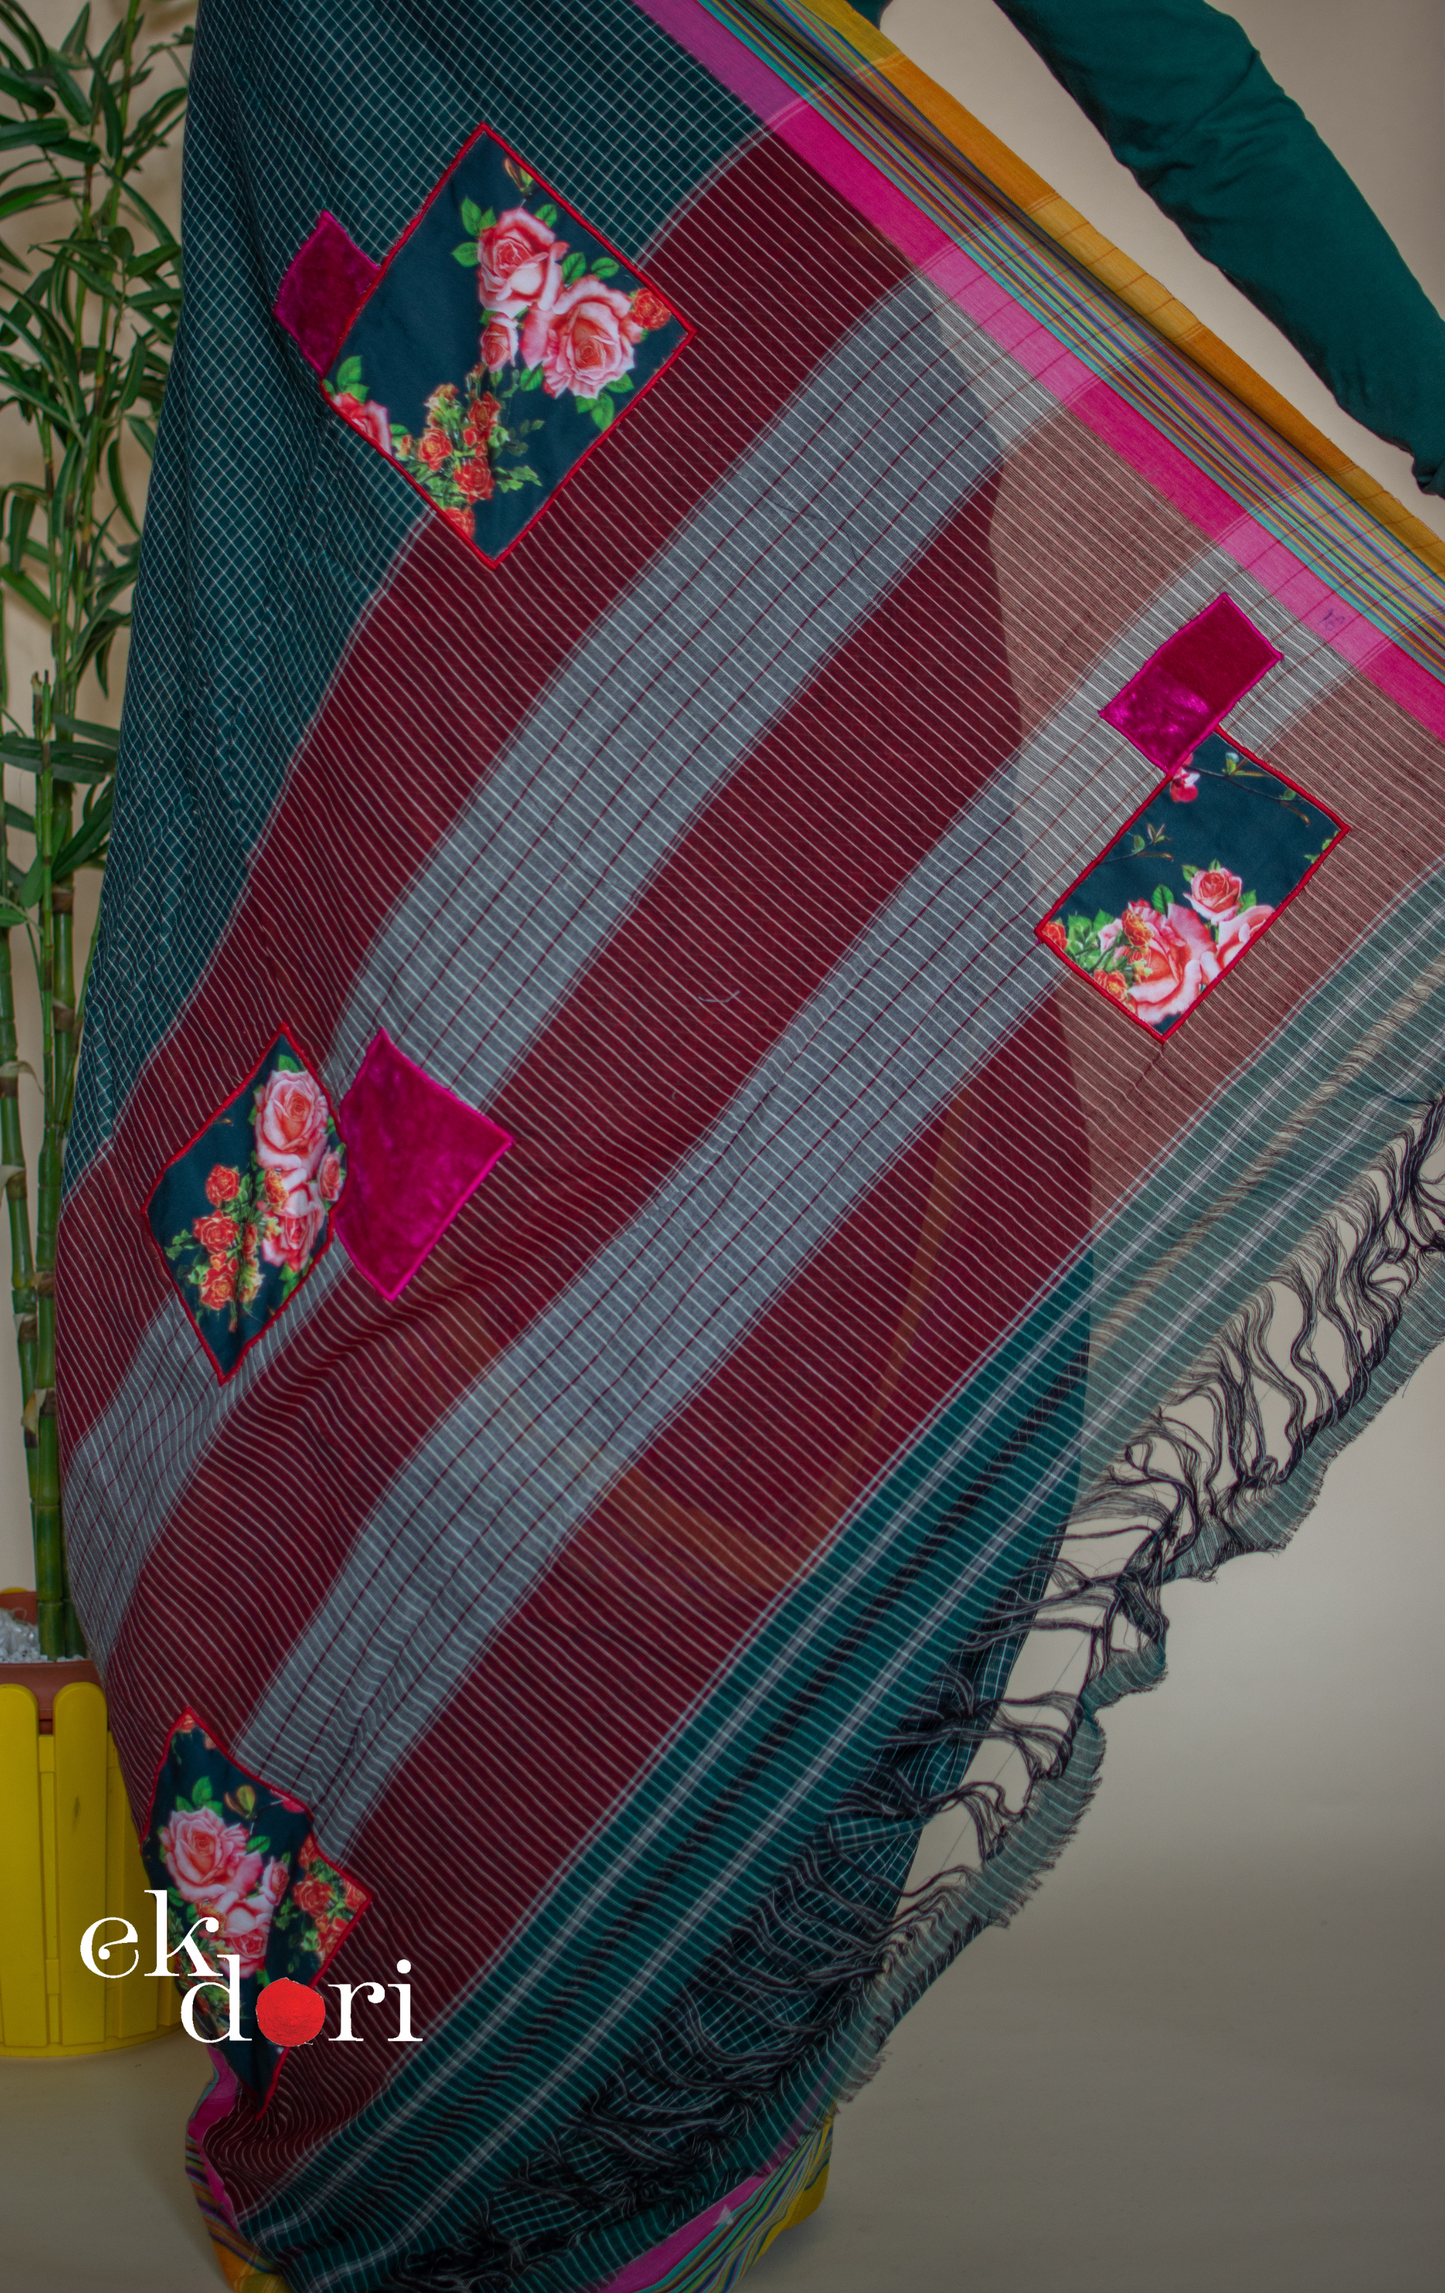 'Rainbow Over The Forest' Handloom Cotton Saree : Buy Handloom Cotton Statement Embroidered Saree